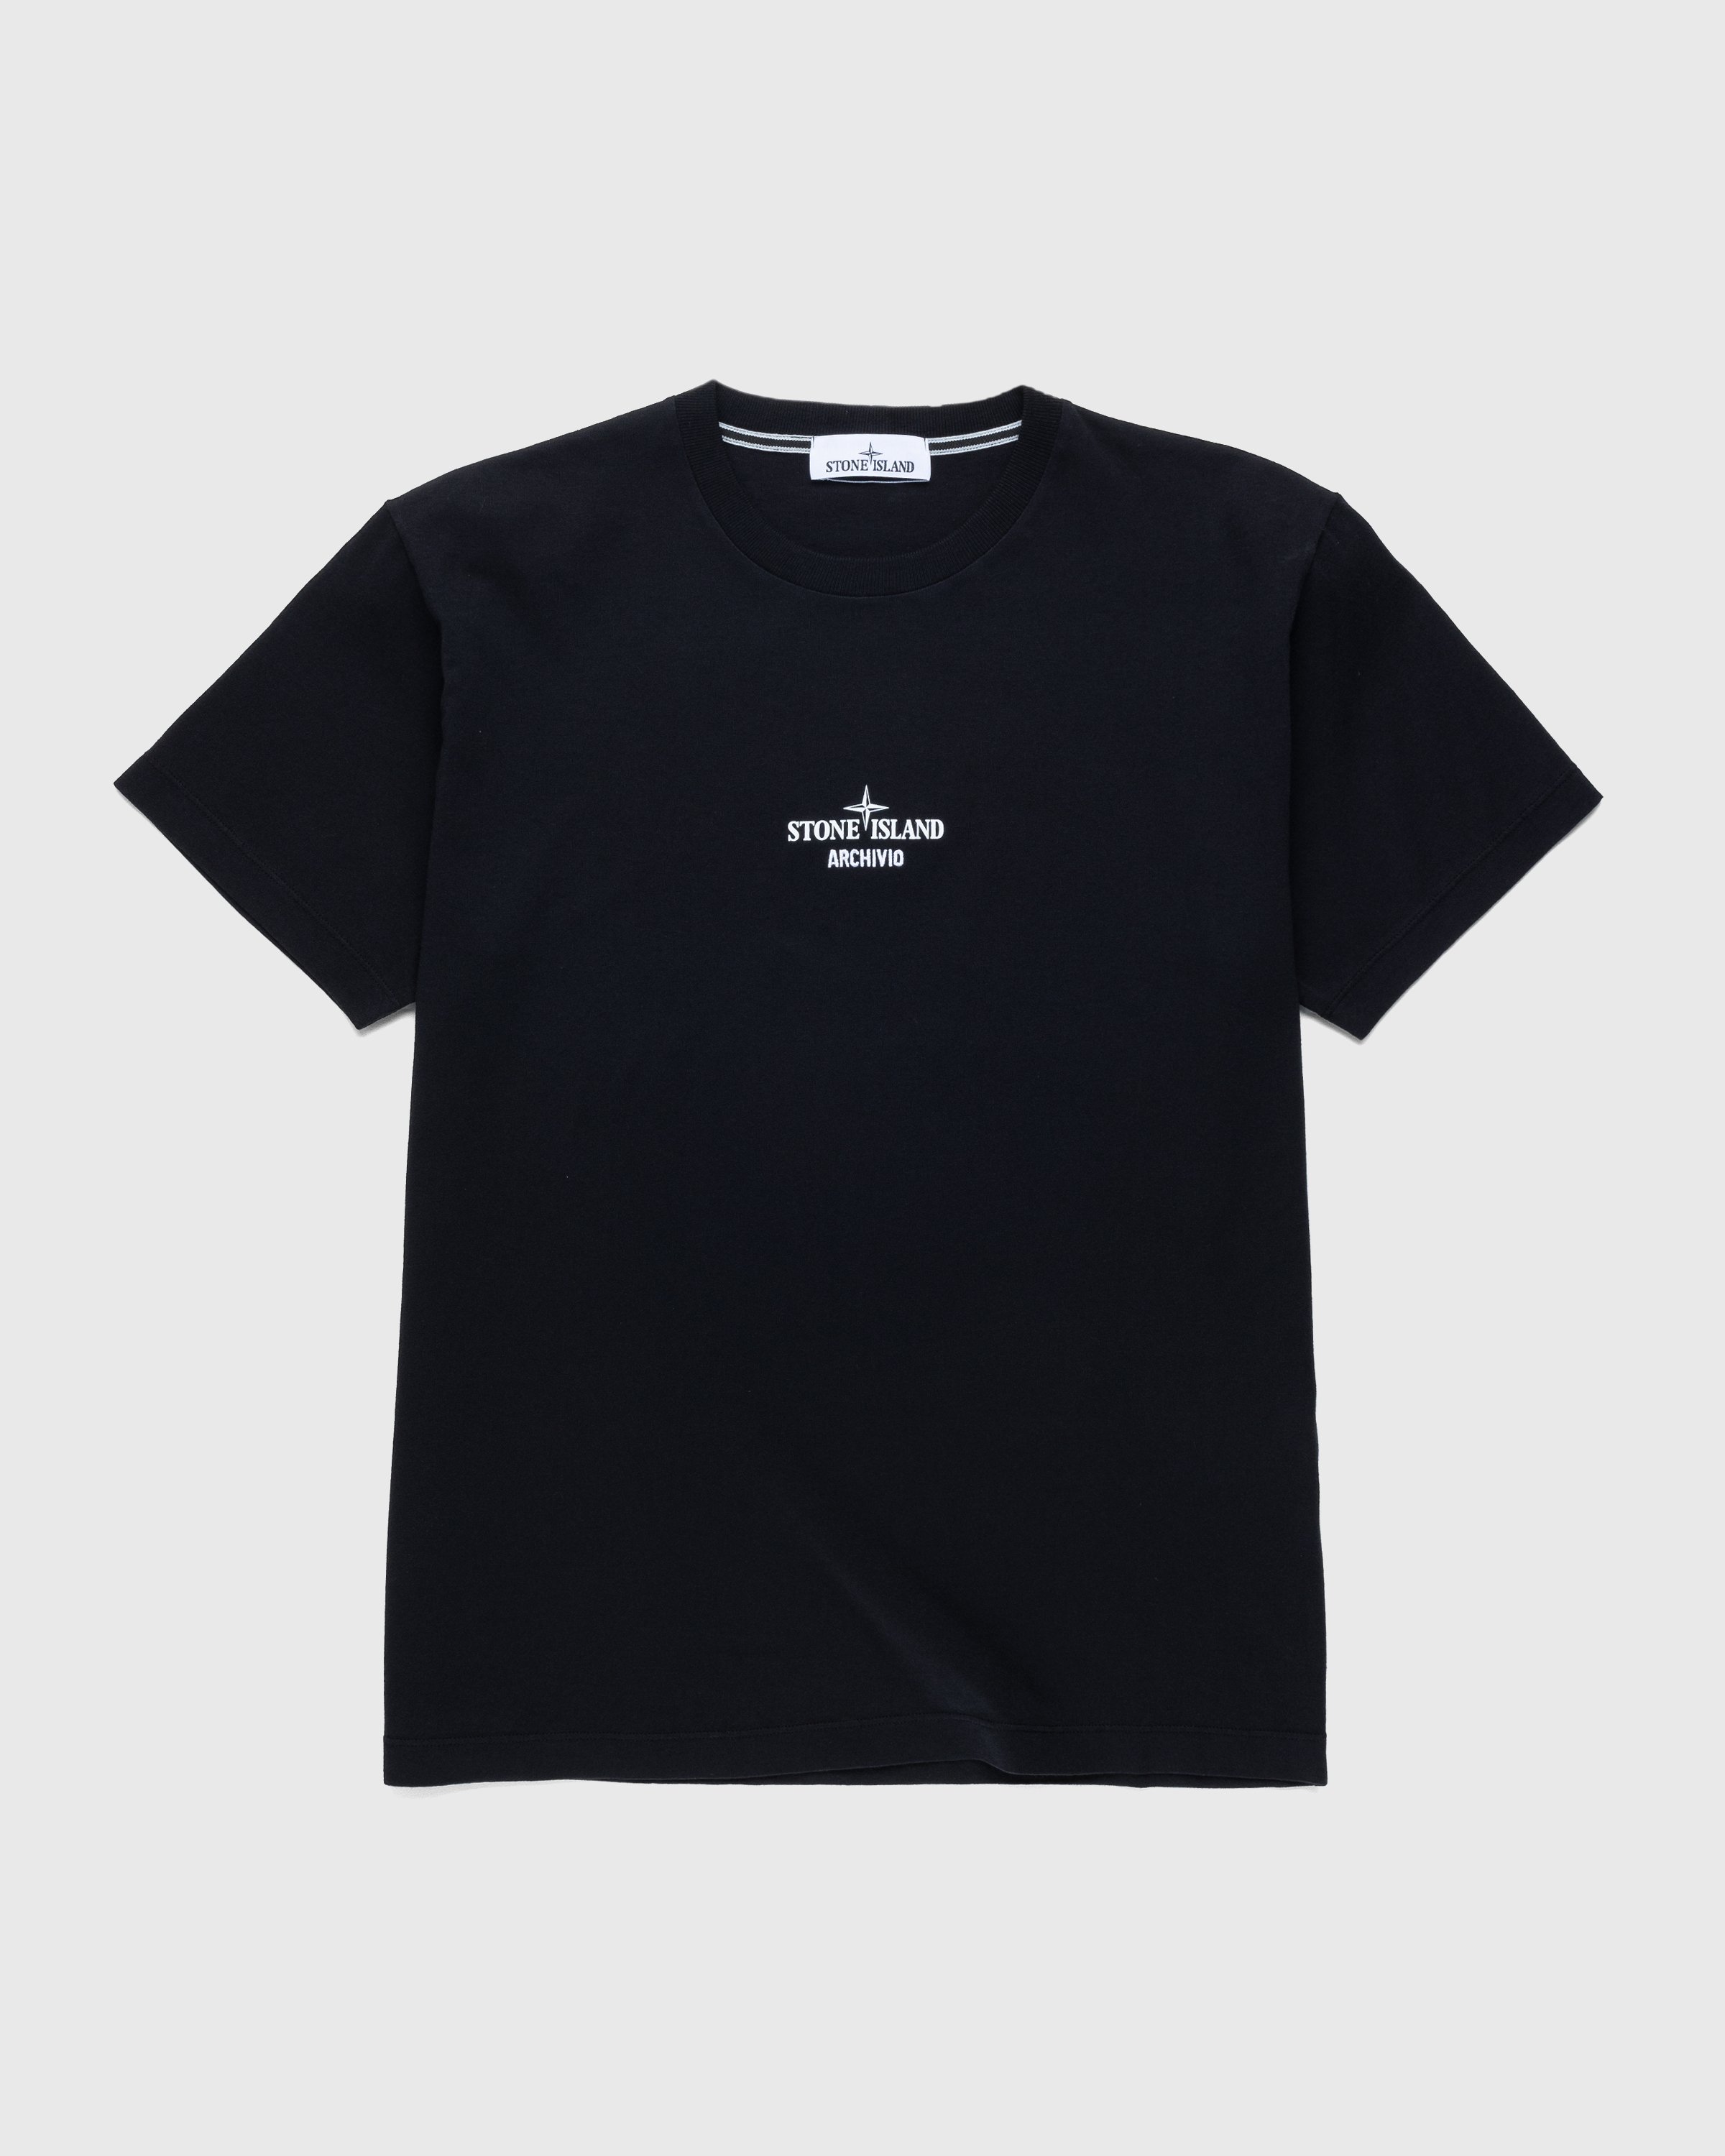 Stone Island - Archivio T-Shirt Black - Clothing - Black - Image 1